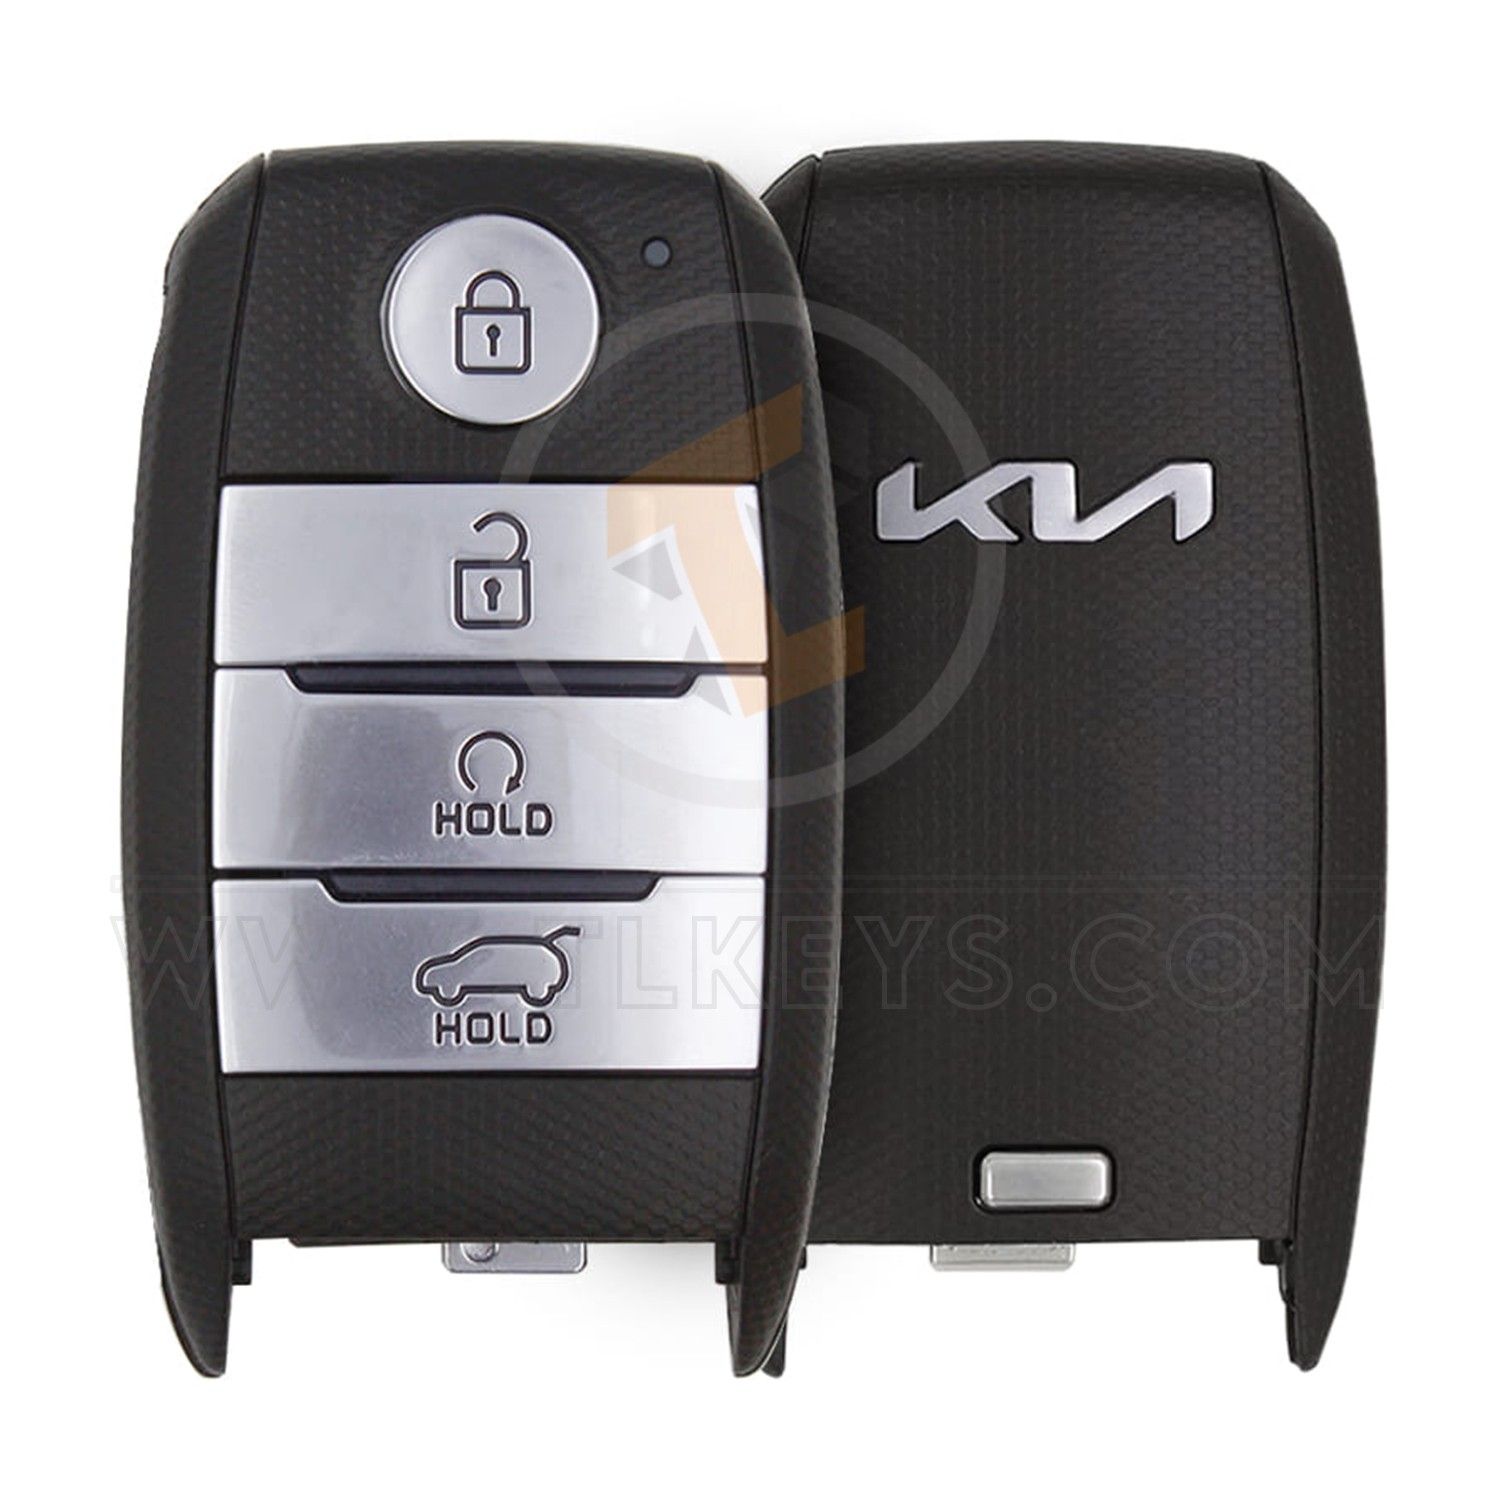 Refurbished Kia Smart Proximity Carens Buttons 4